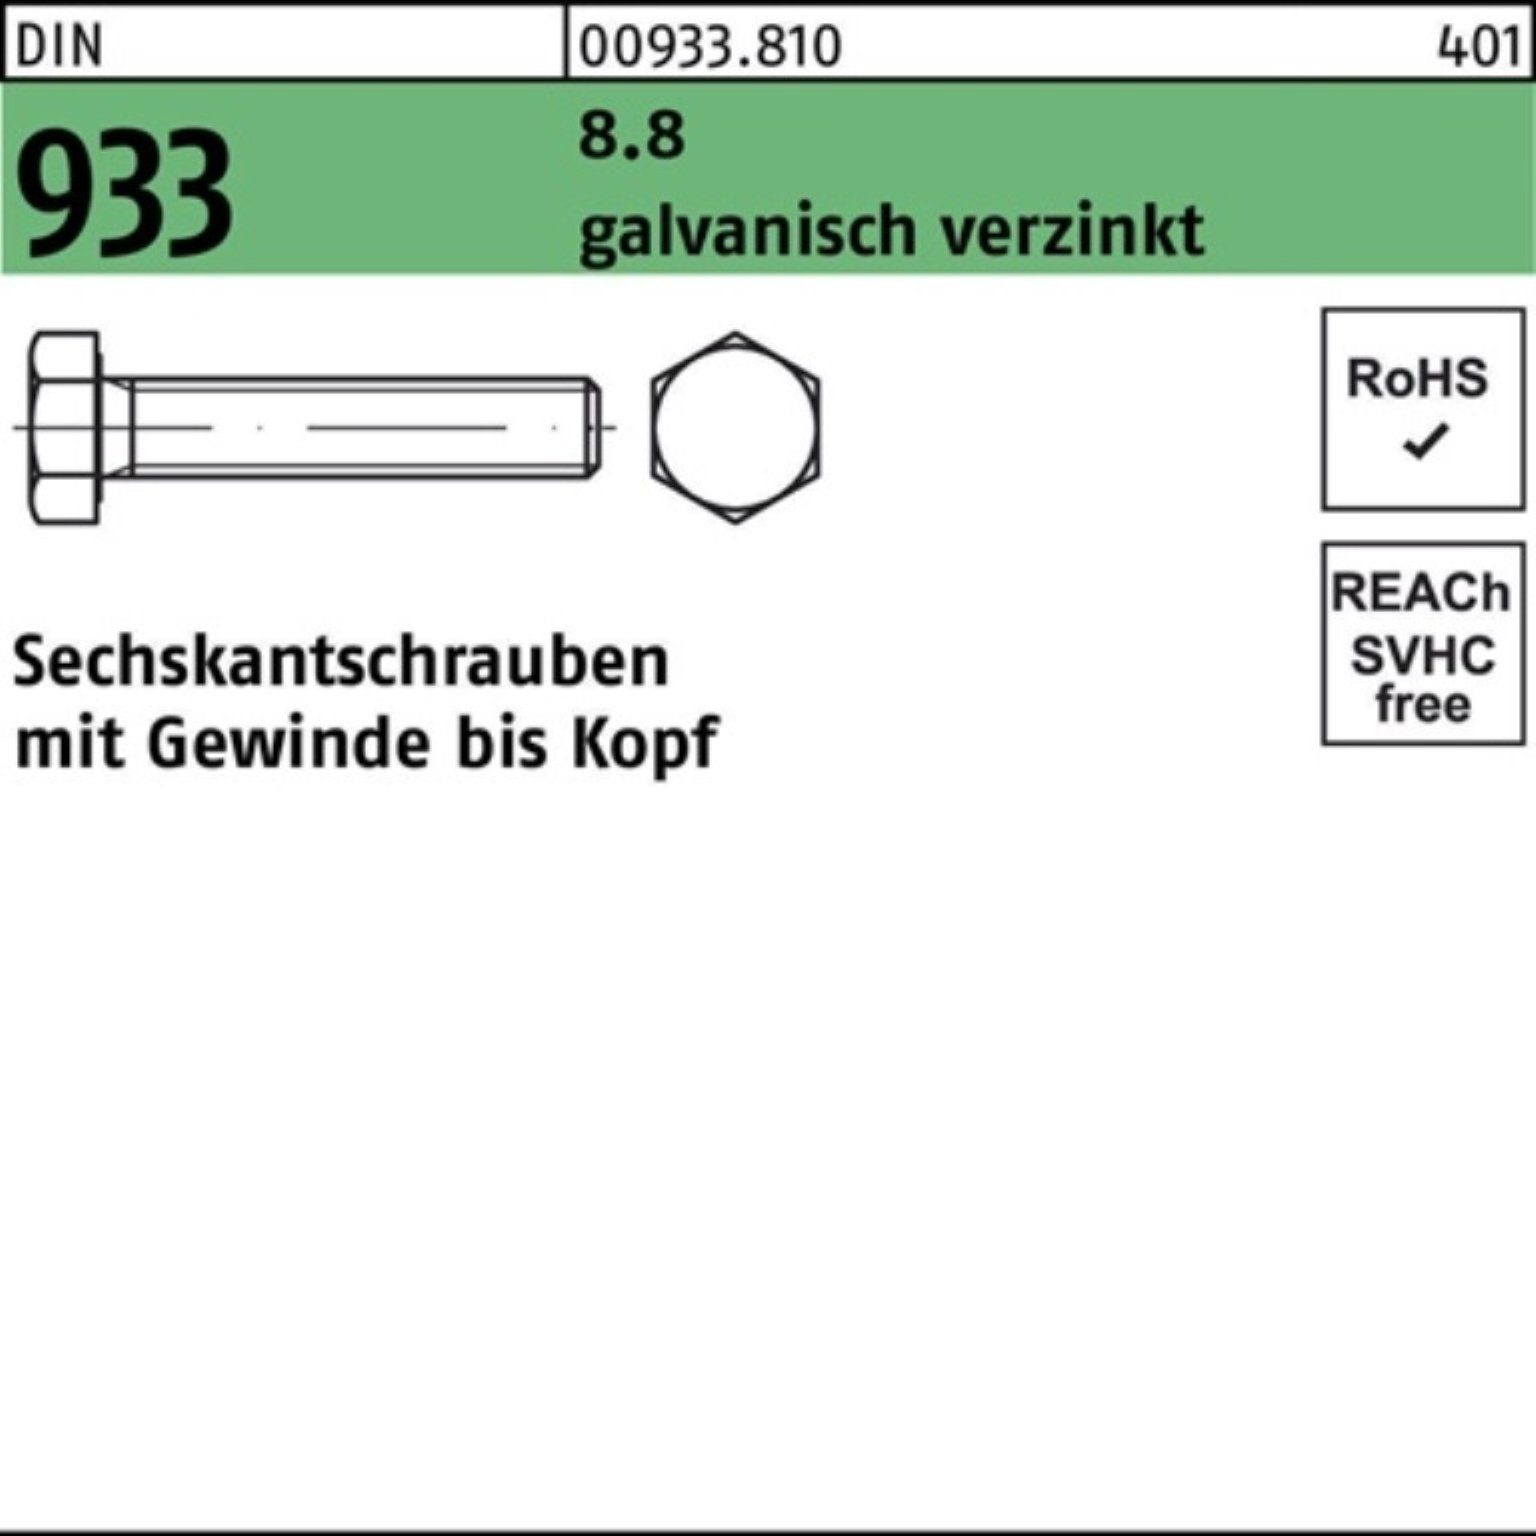 Reyher Sechskantschraube 100er 40 933 VG M30x DIN Pack 8.8 galv.verz. 1 Stüc Sechskantschraube